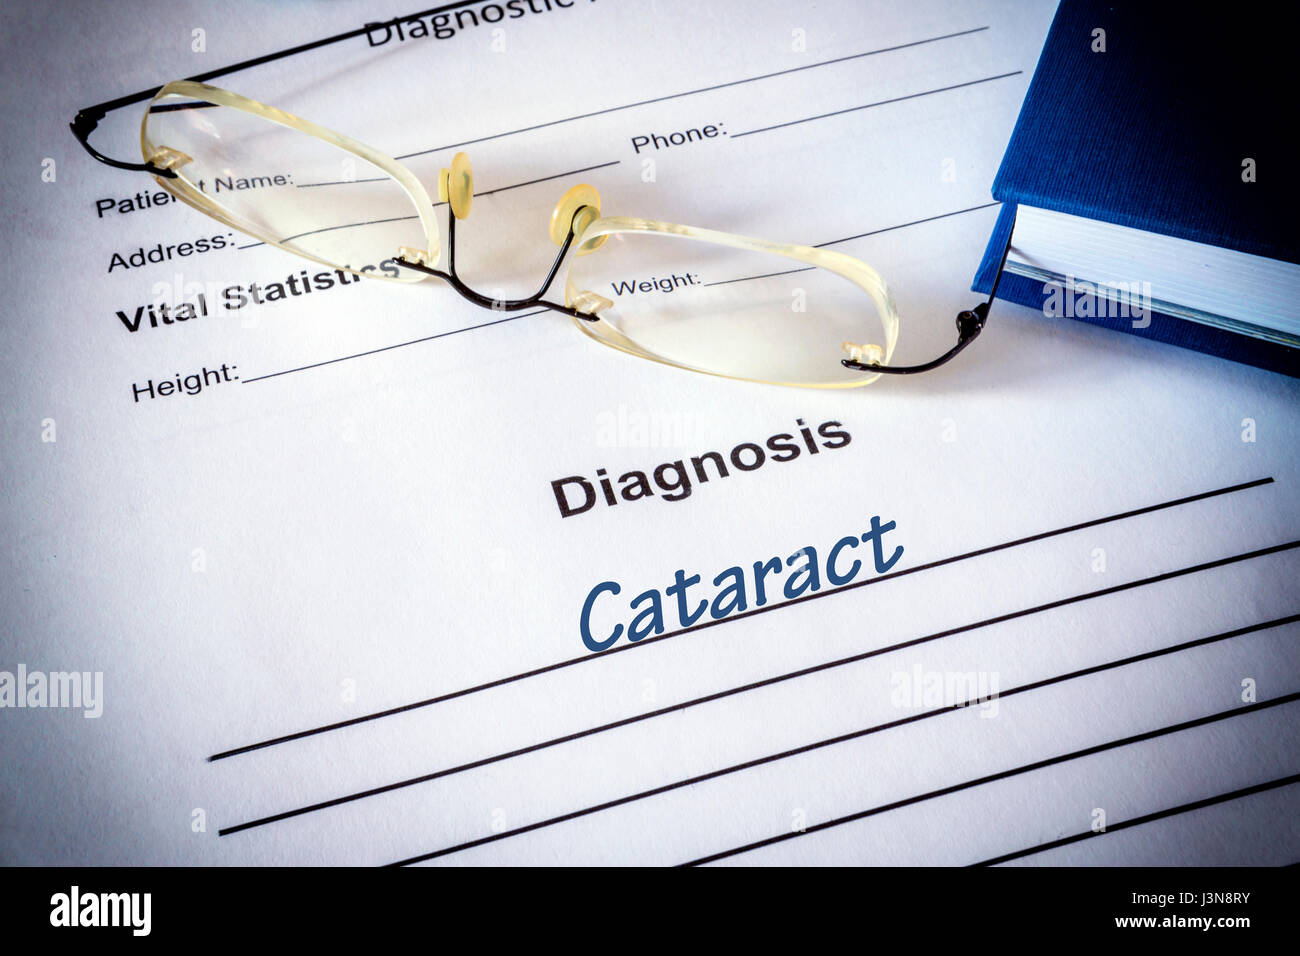 Diagnóstico lista con cataratc. Concepto de trastorno ocular. Foto de stock